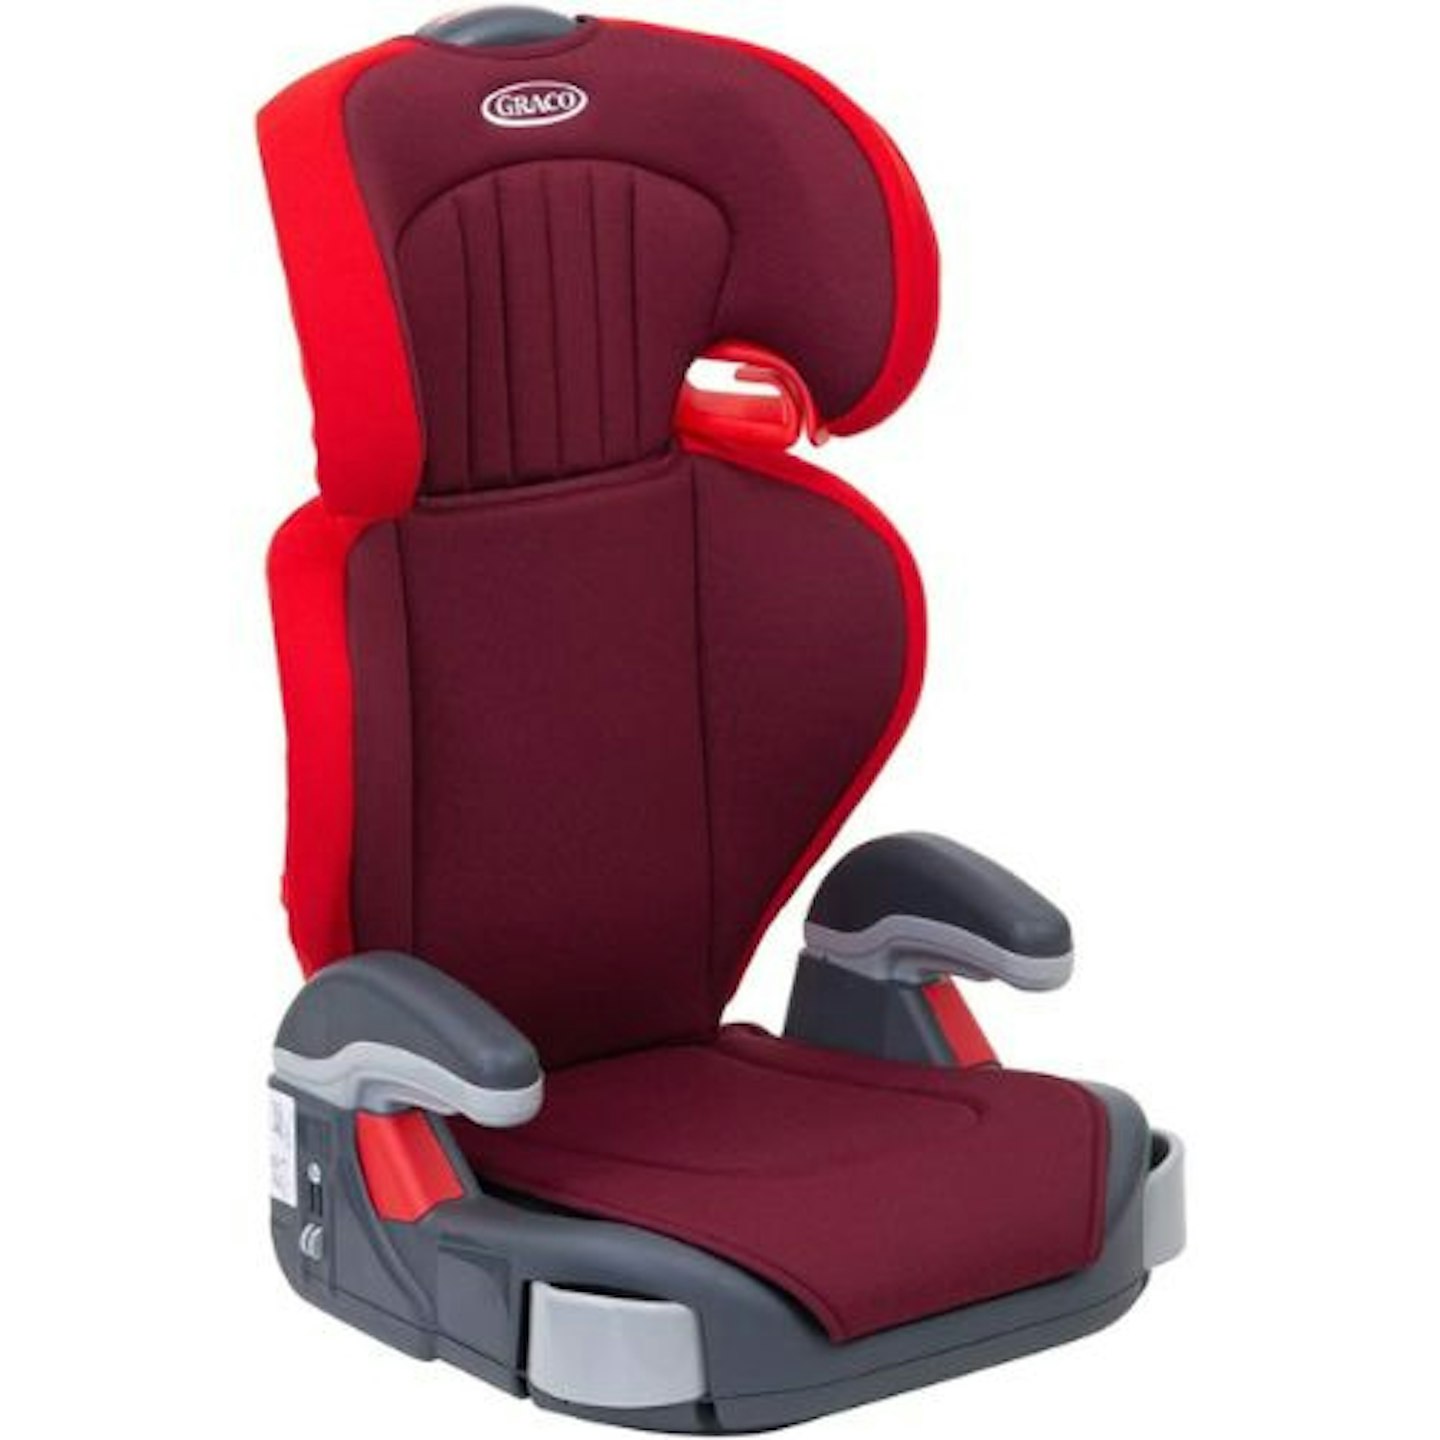 Graco Junior Maxi Lightweight High back Booster Car Seat